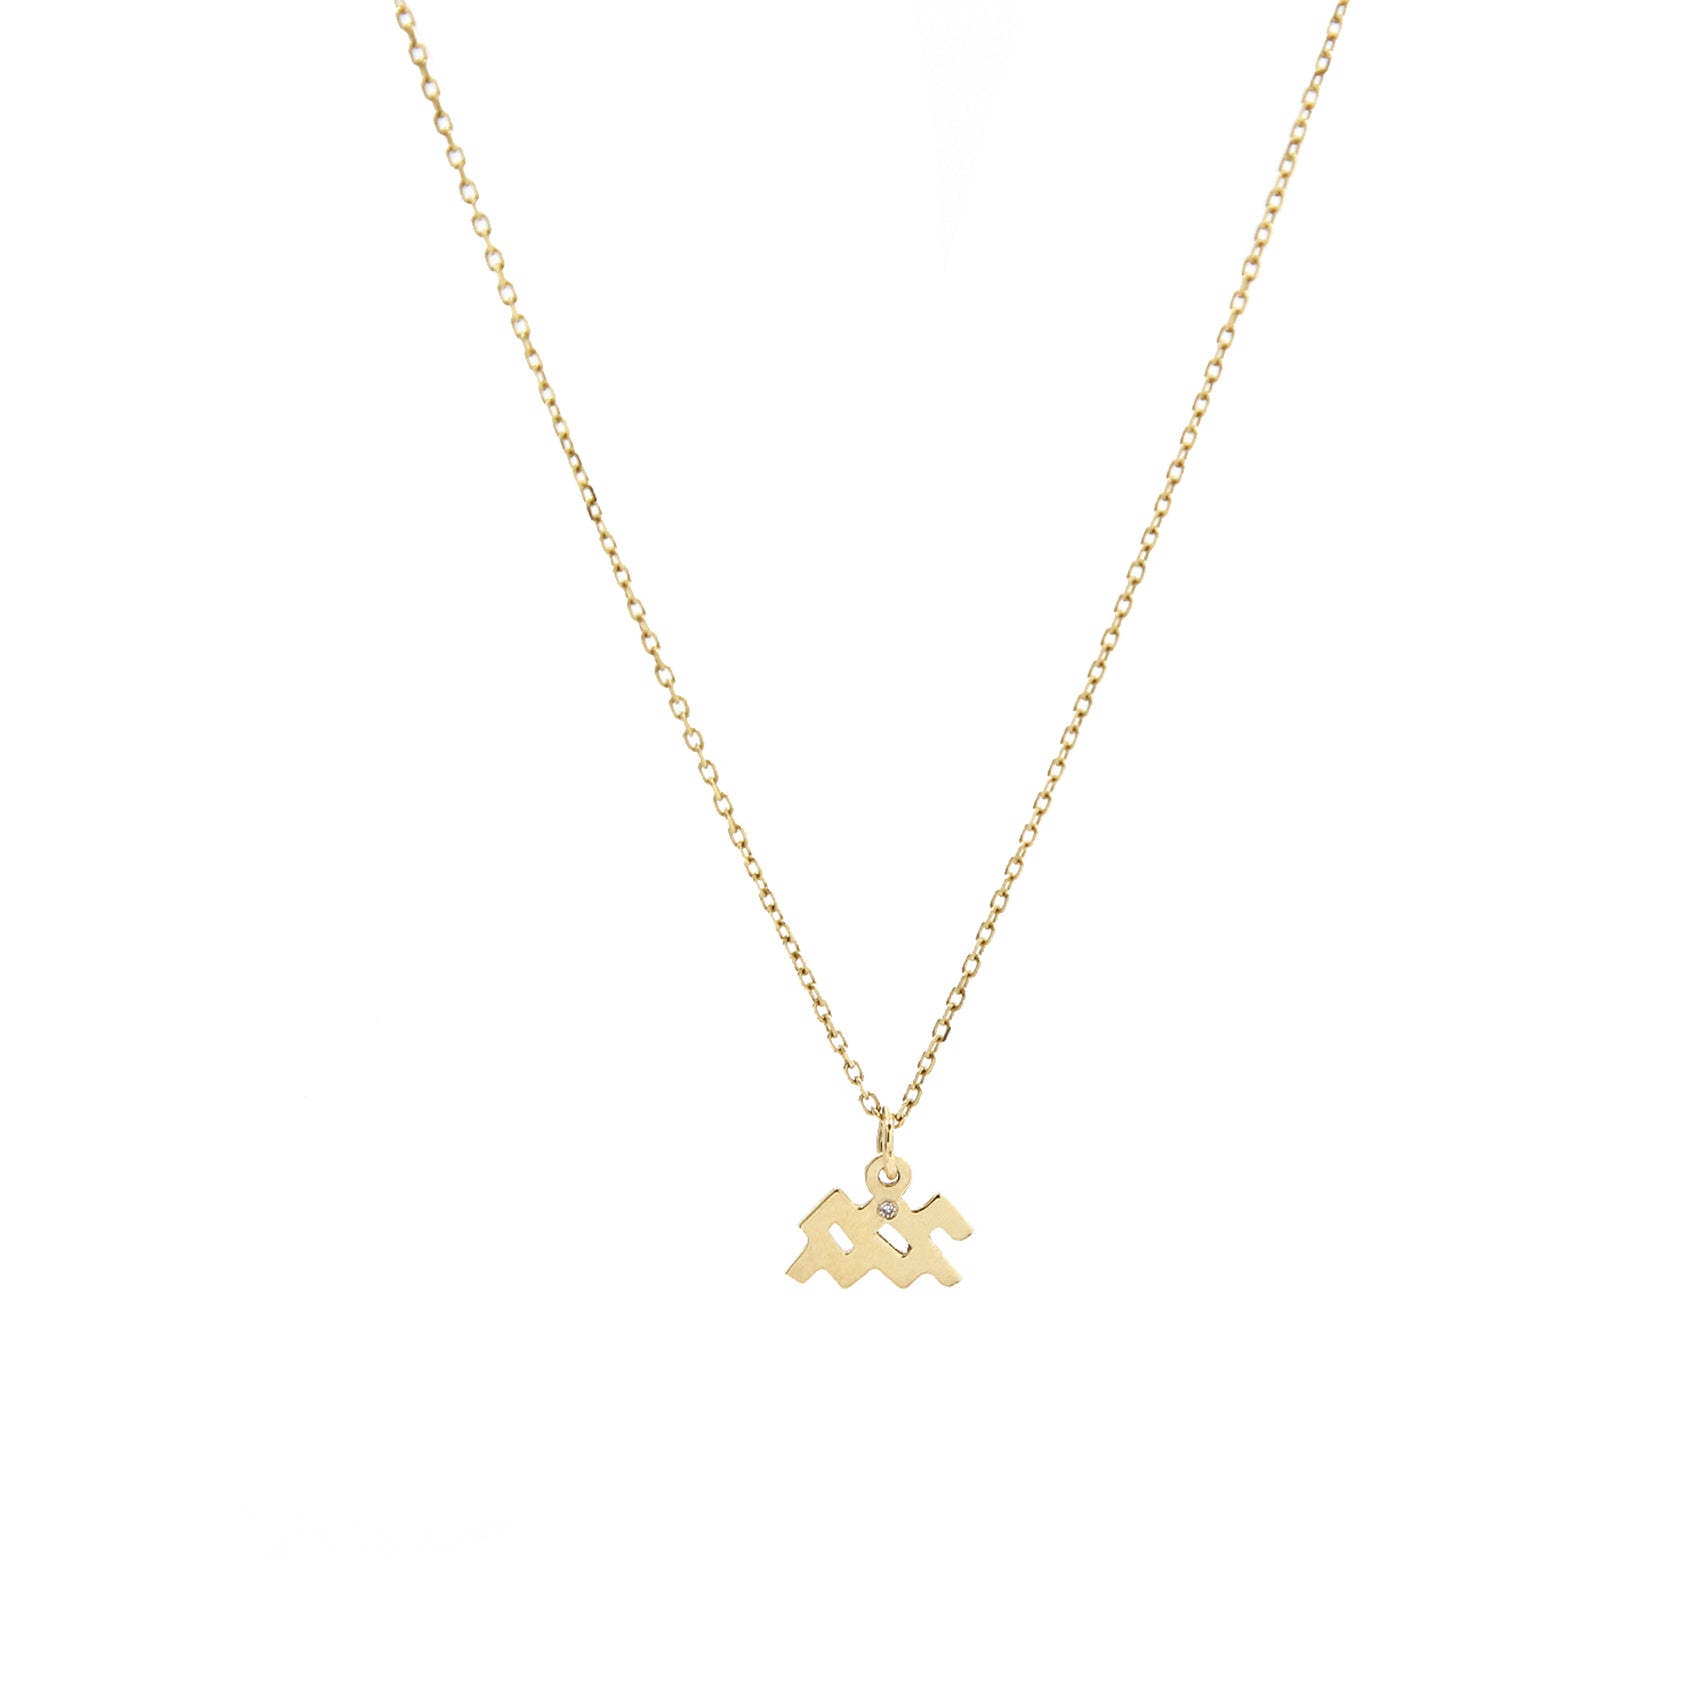 Shop Gold Zodiac Diamond Necklaces for Aquarius